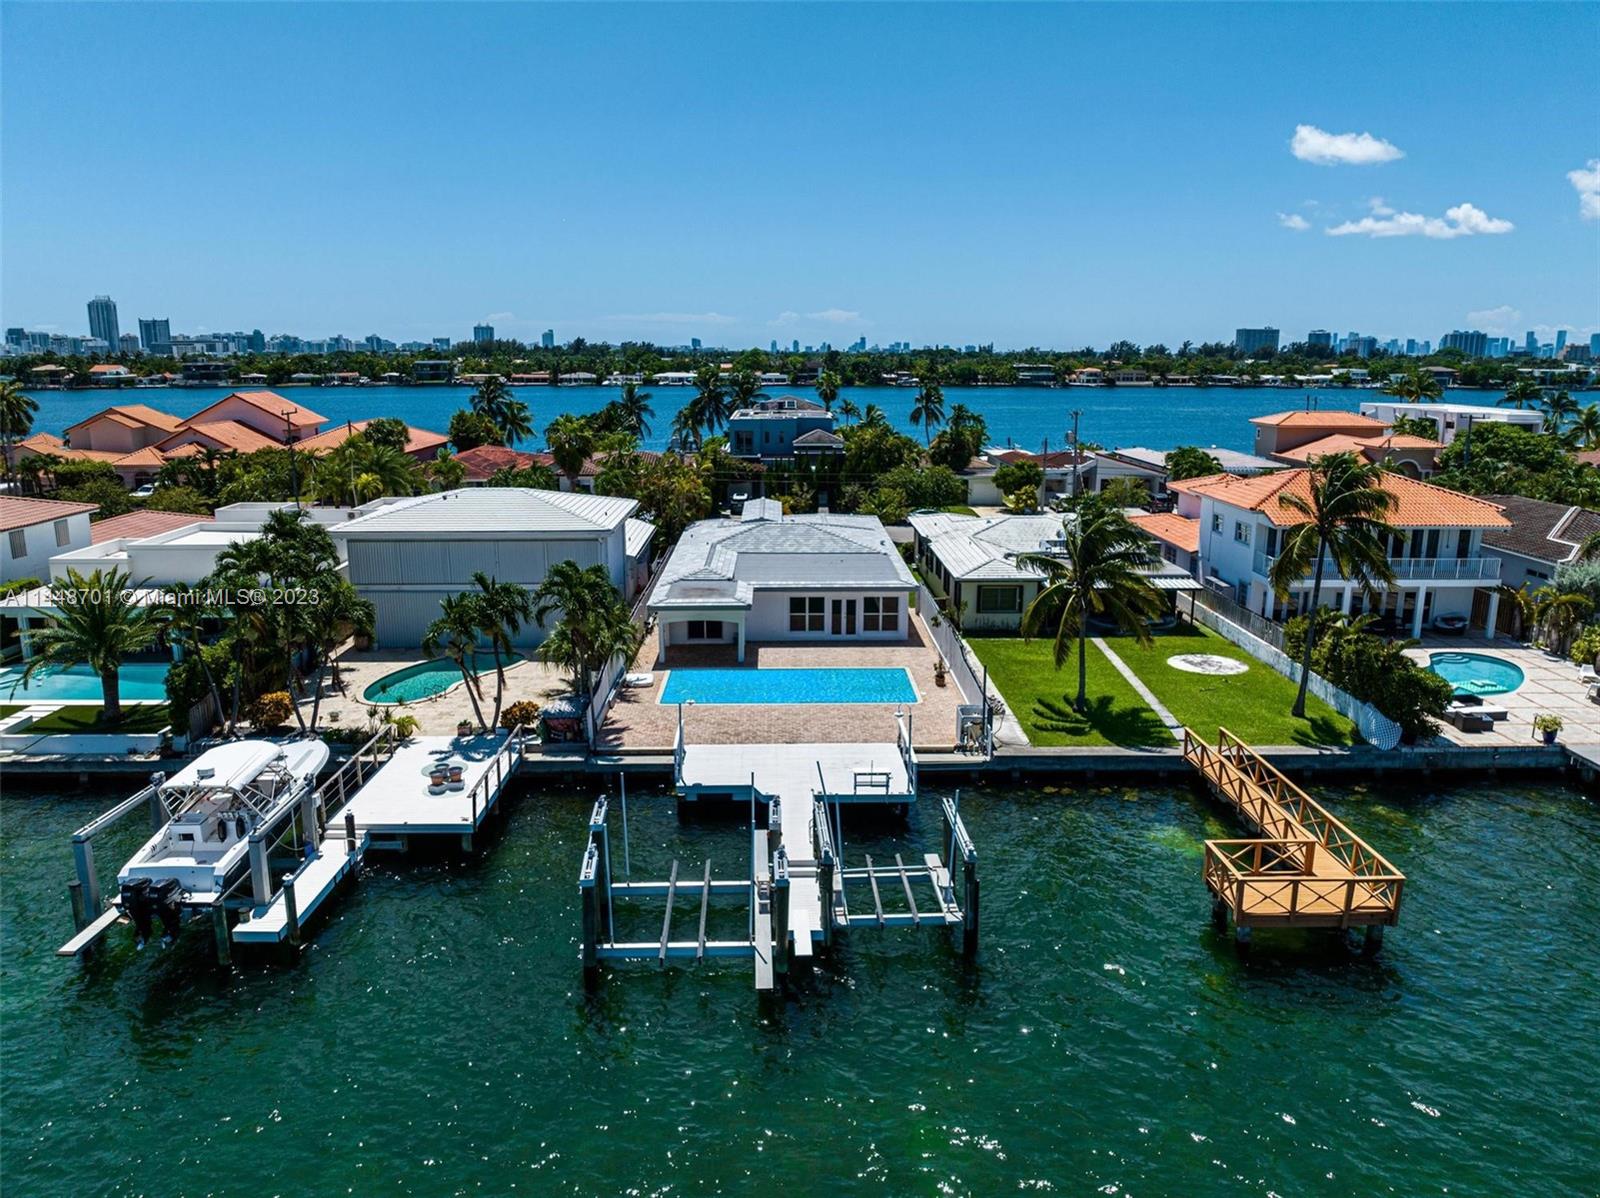 Rental Property at 1451 Stillwater Dr, Miami Beach, Miami-Dade County, Florida - Bedrooms: 5 
Bathrooms: 4  - $12,000 MO.